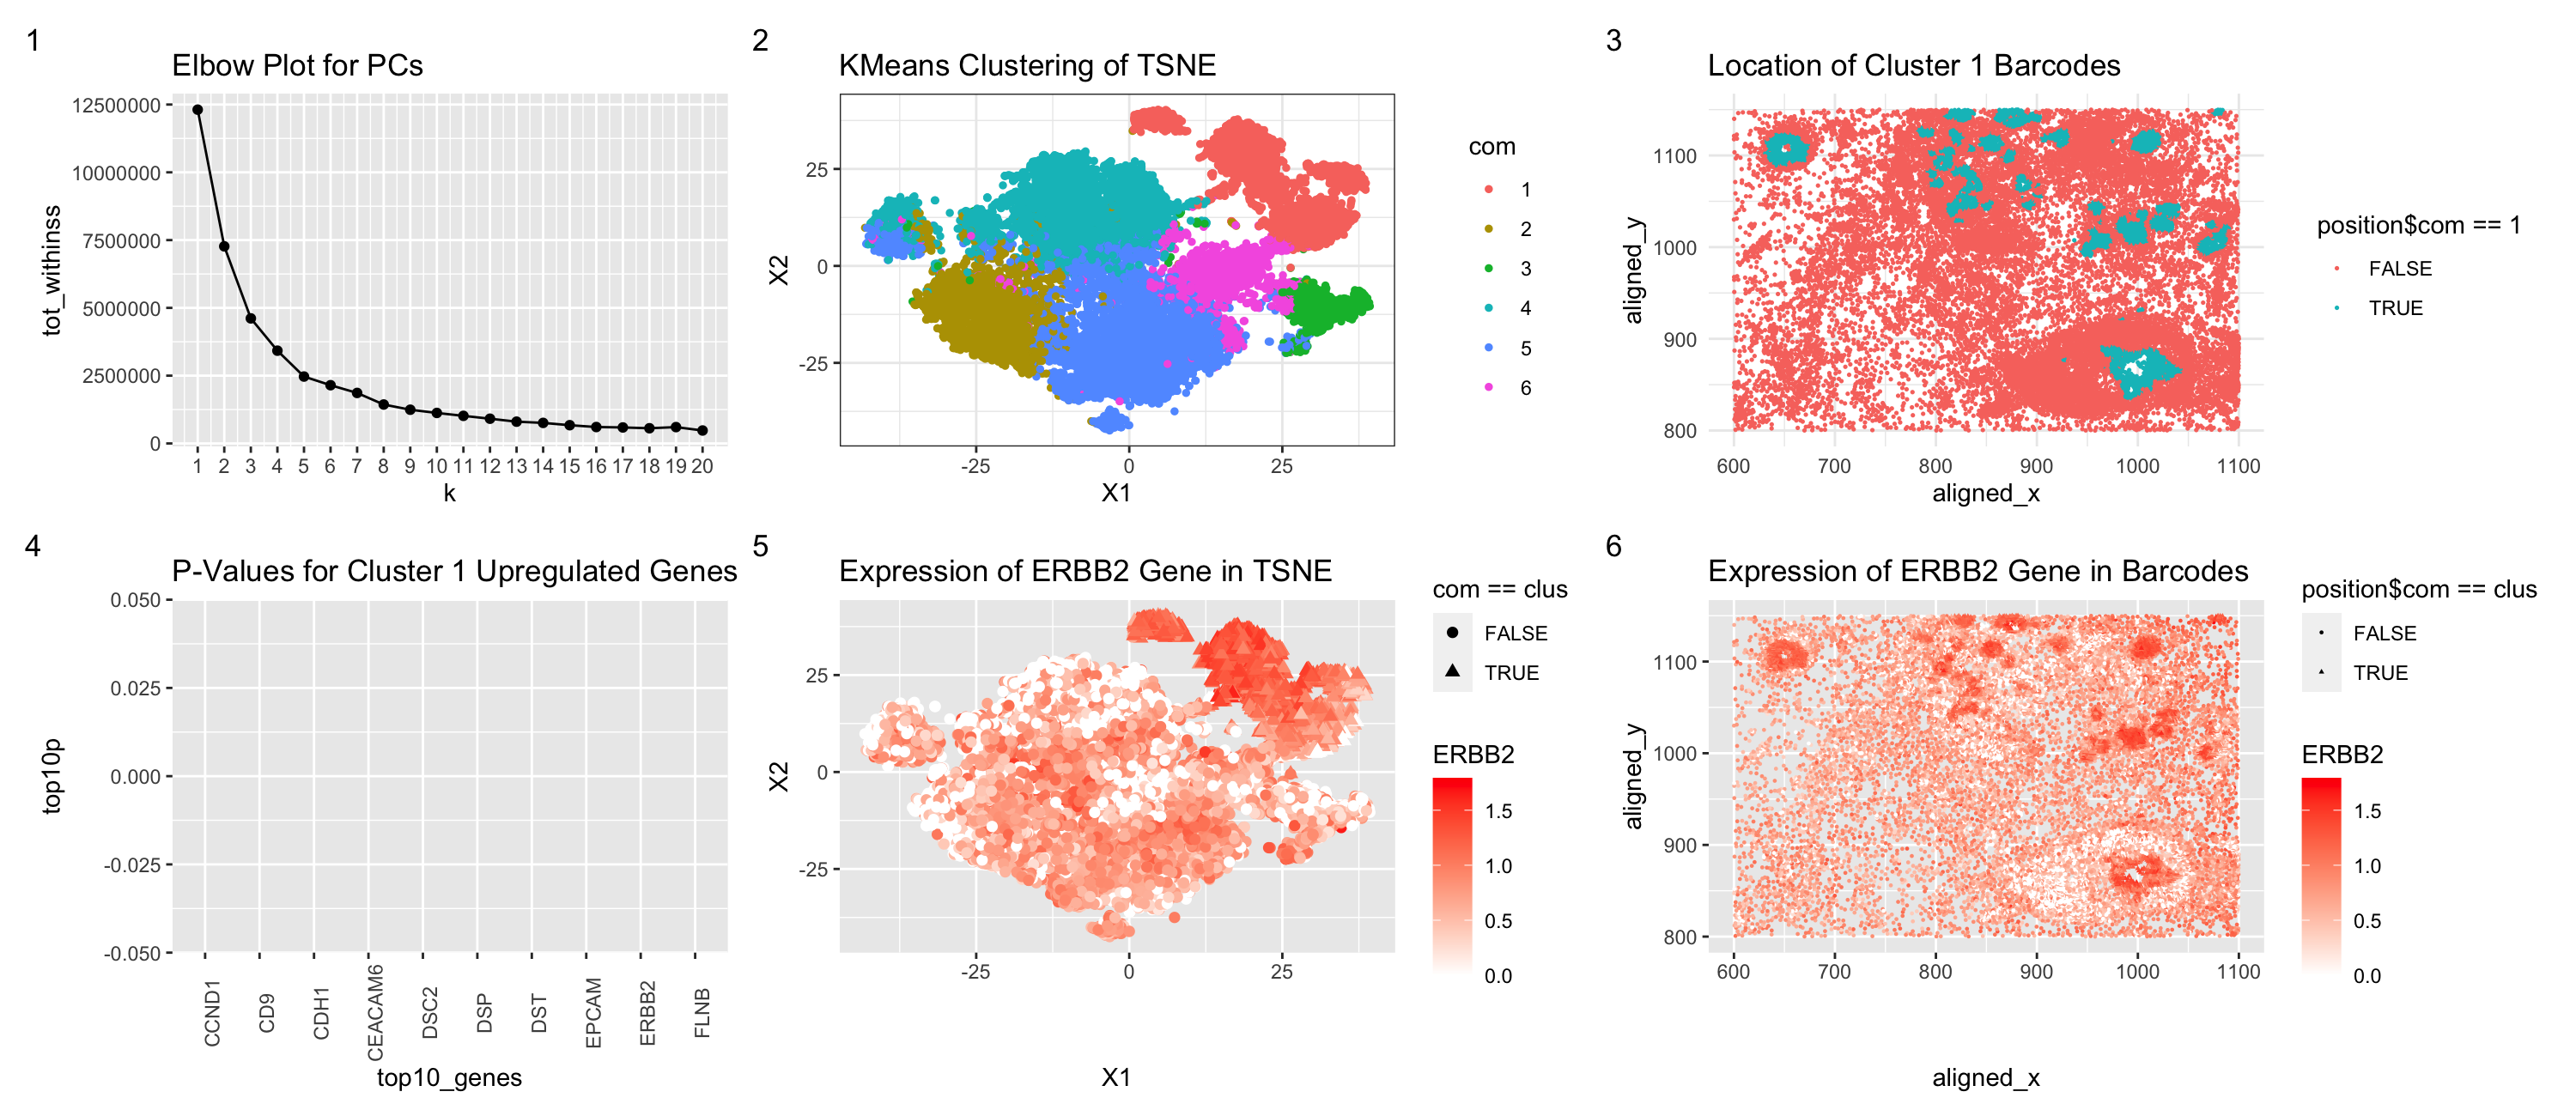 Differential Expression of ERBB2 Gene in Pikachu Data